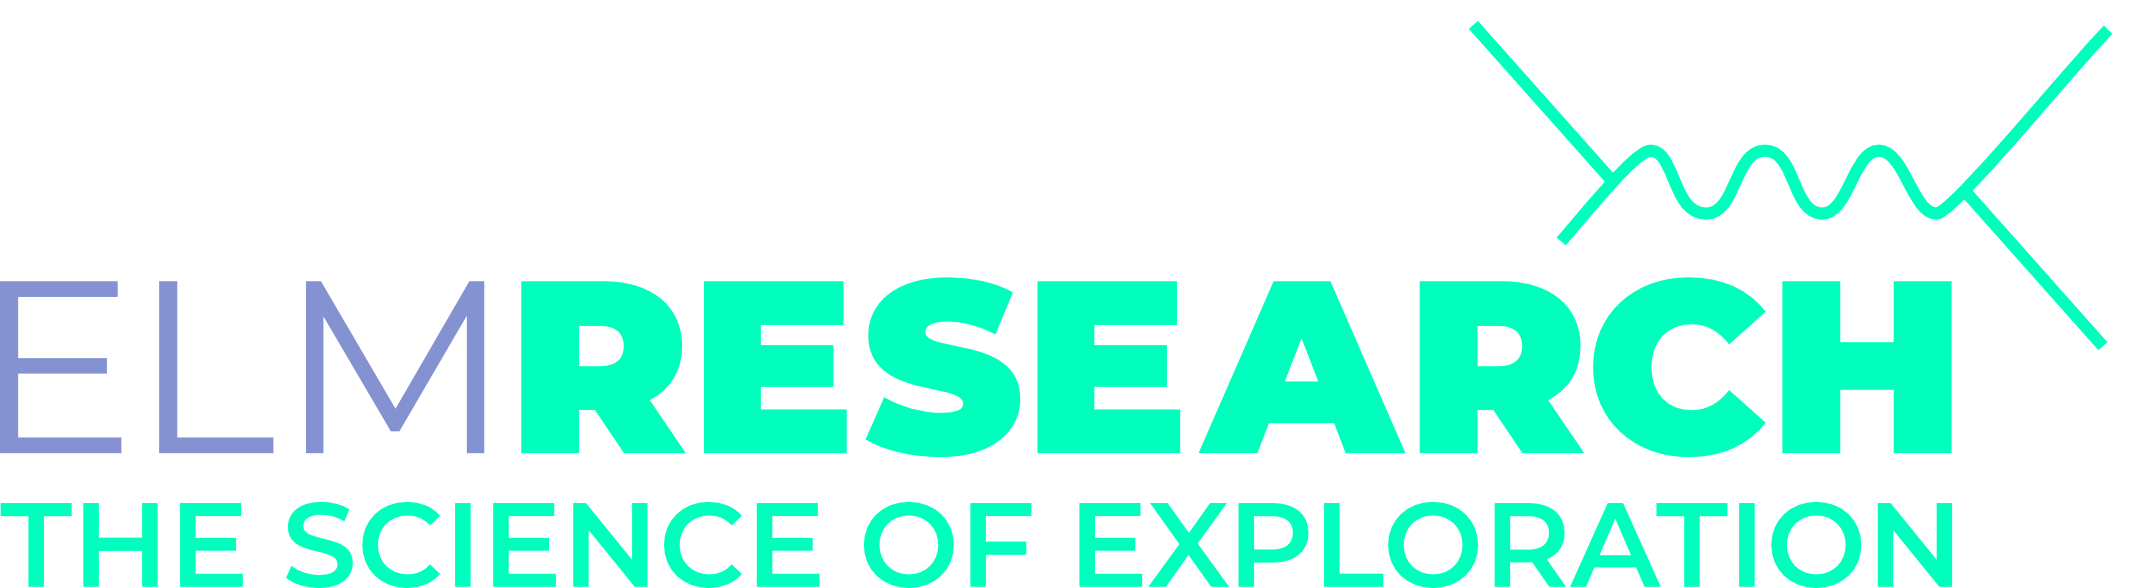 elm-research-logo